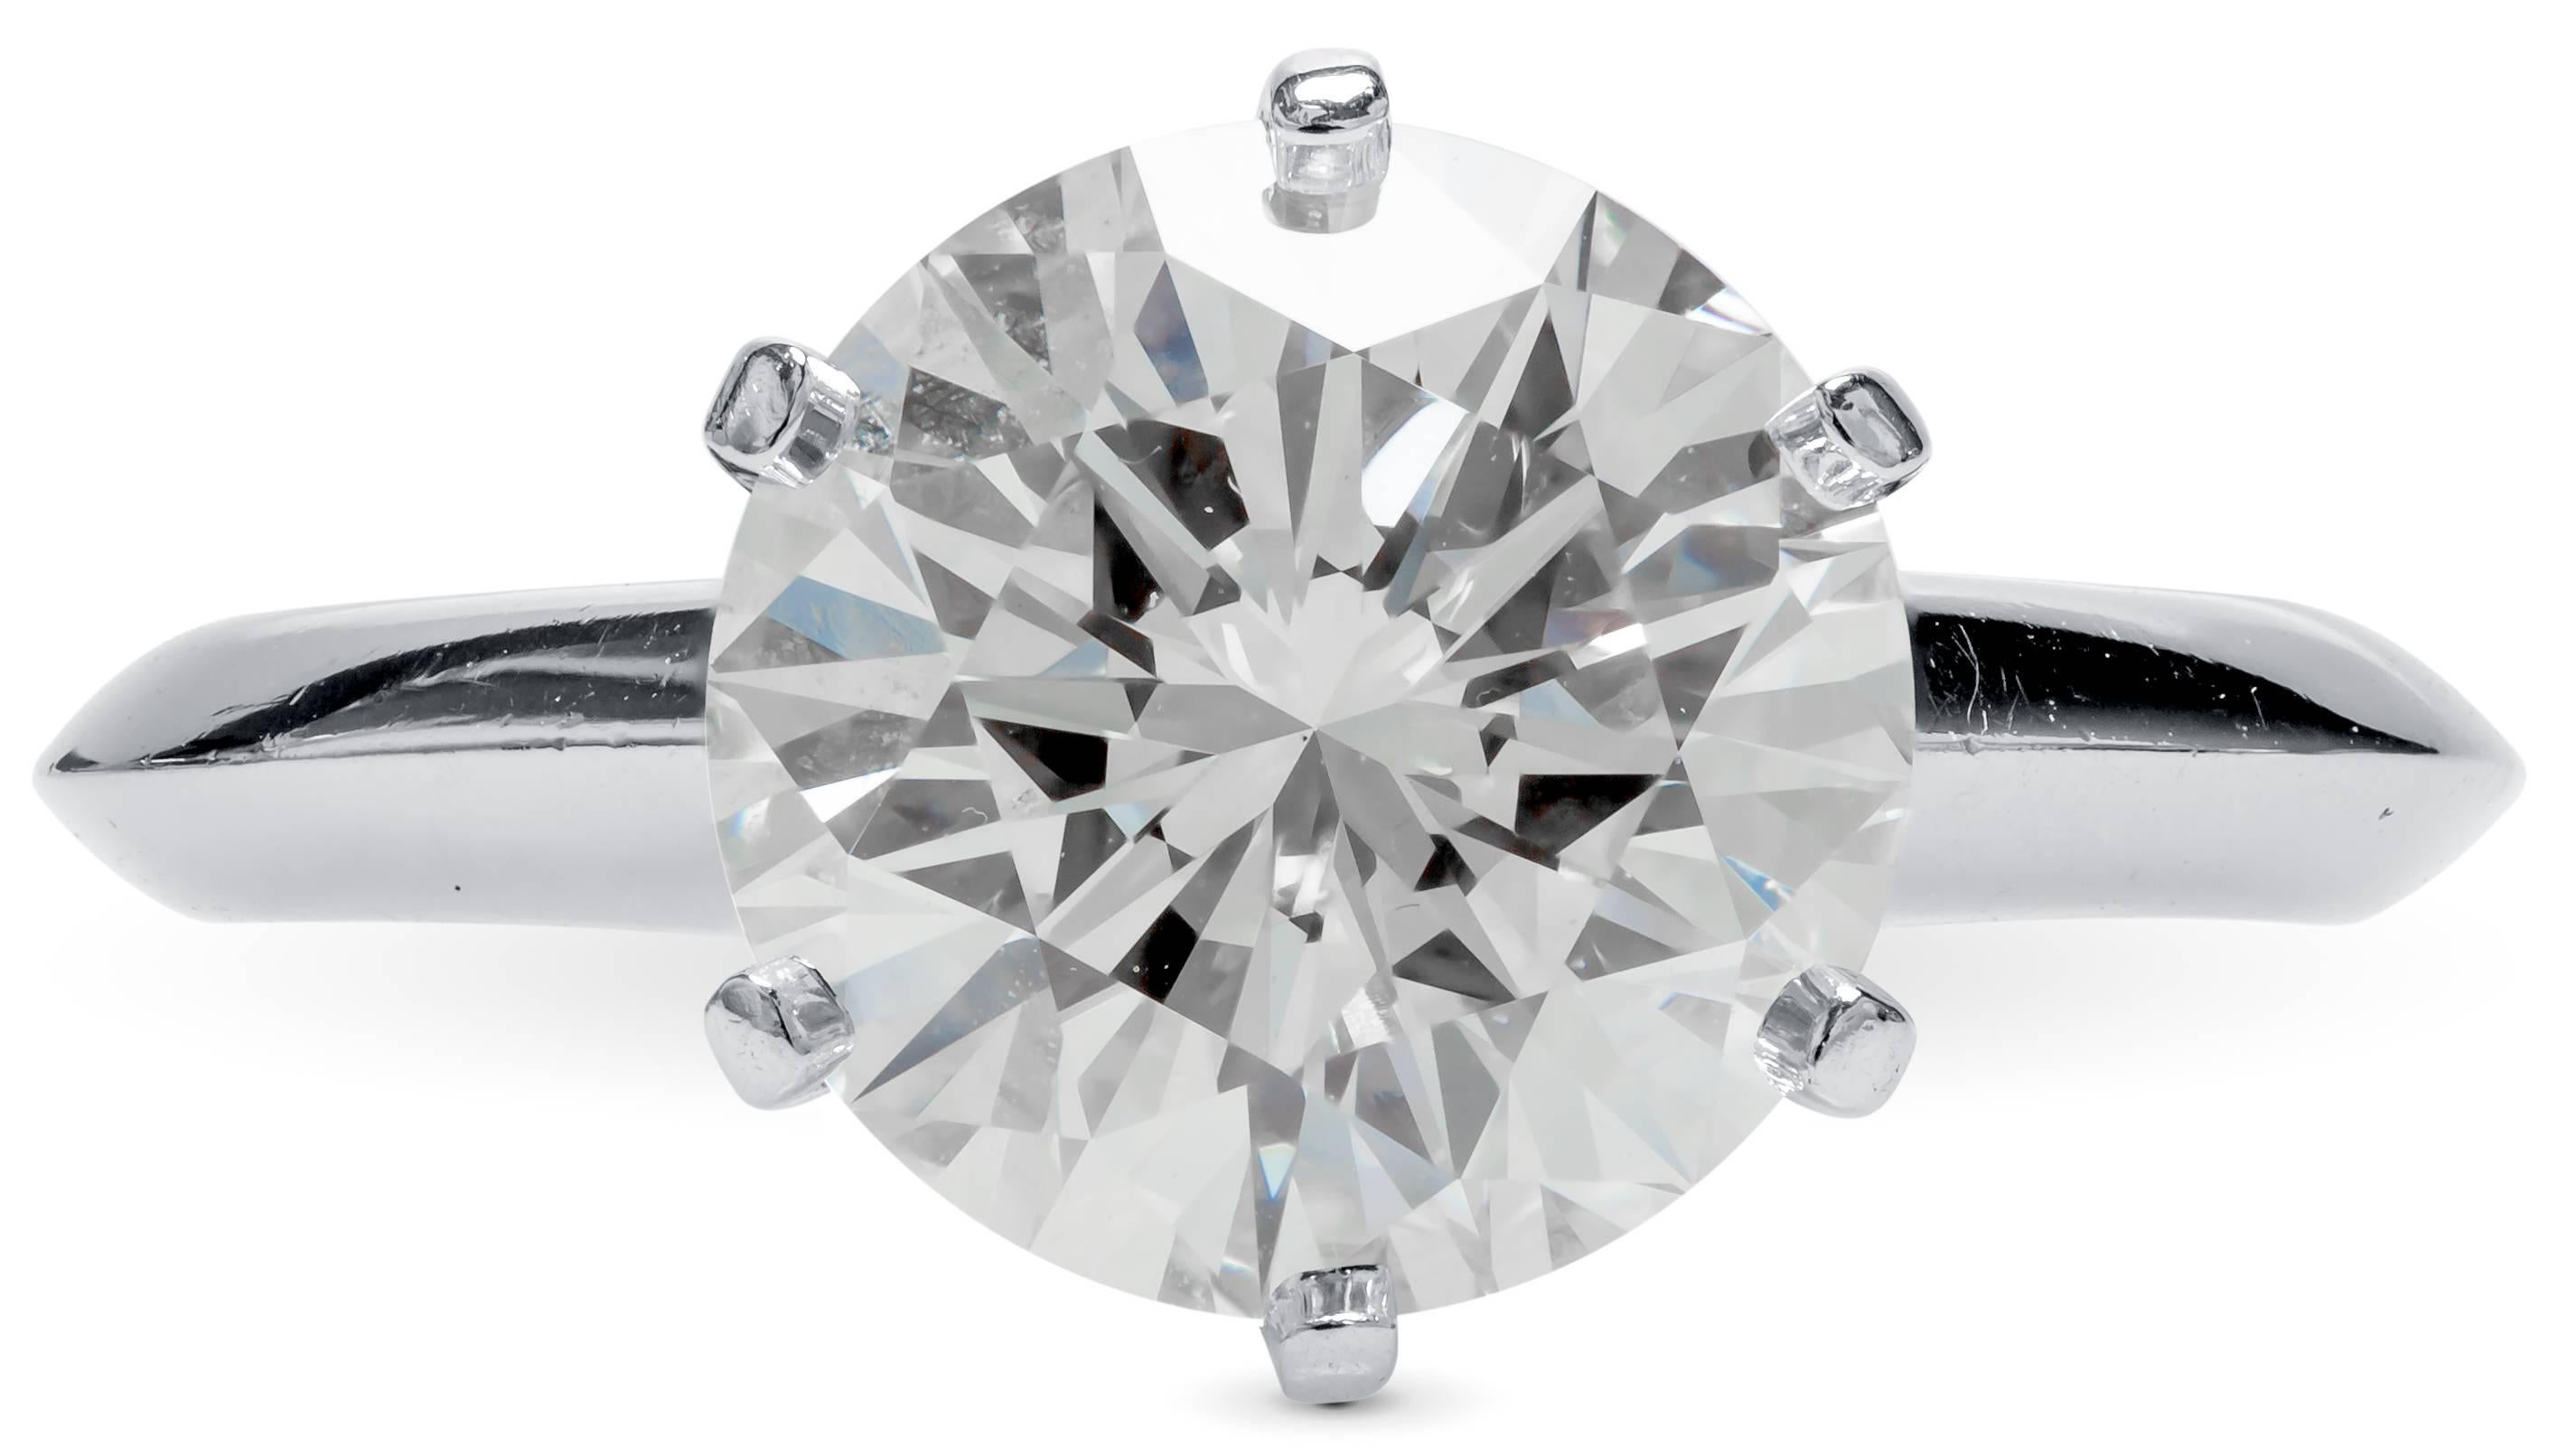 2.35 carat diamond ring